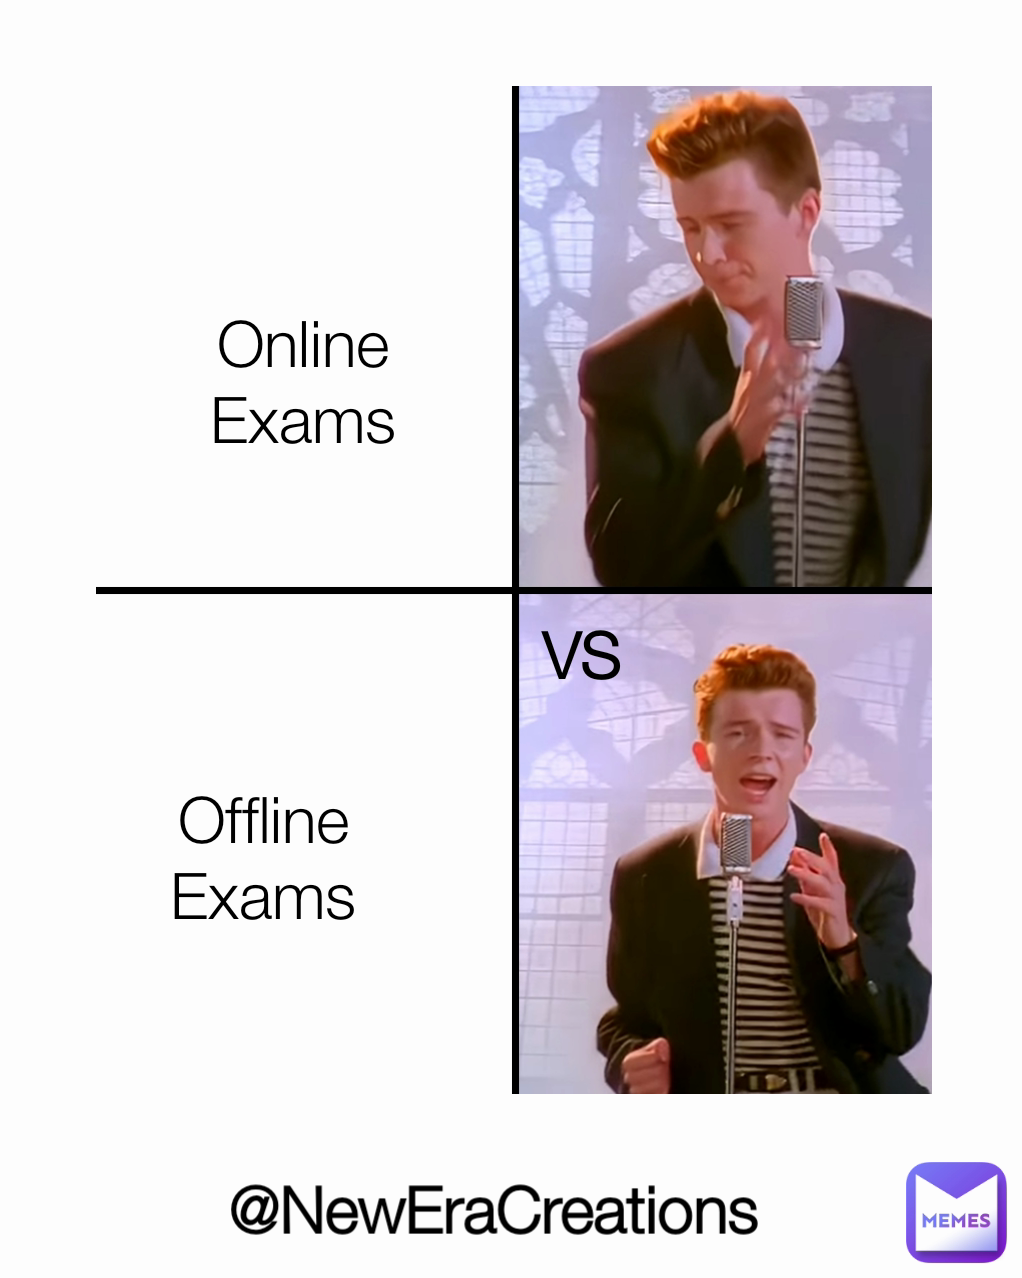 @NewEraCreations Online Exams VS Offline Exams